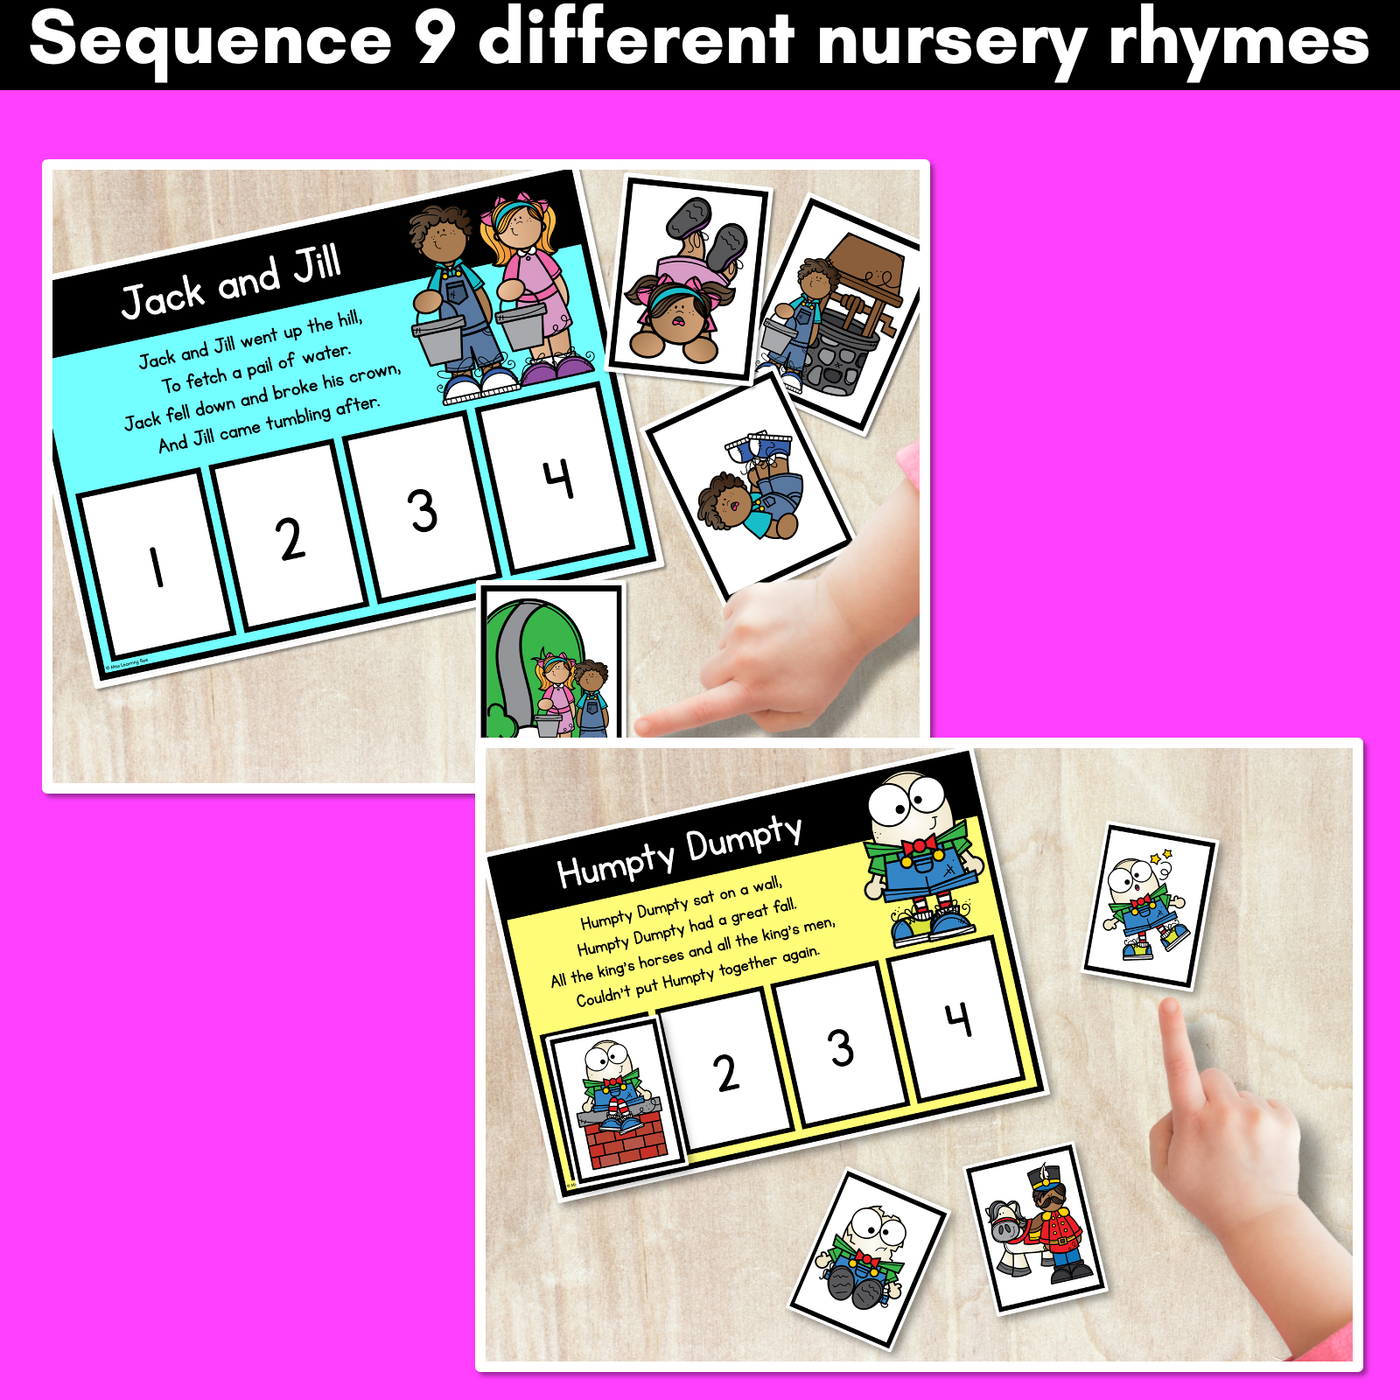 Nursery Rhyme Sequencing Mats